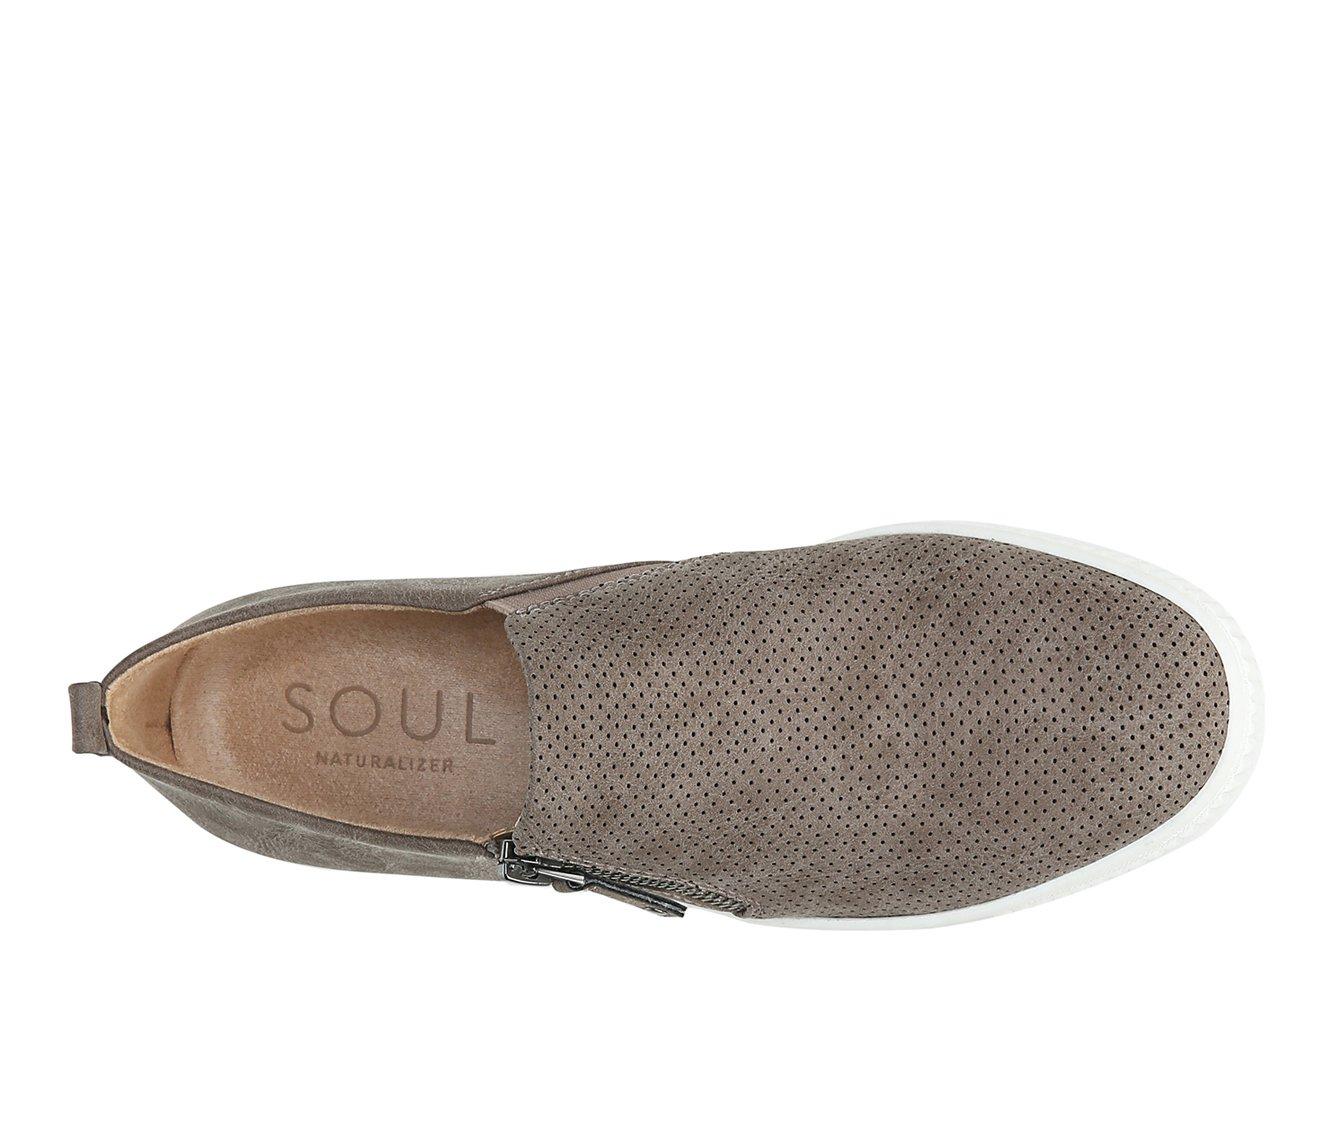 Soul Naturalizer  Slip on sneaker, Shoes, Soul naturalizer